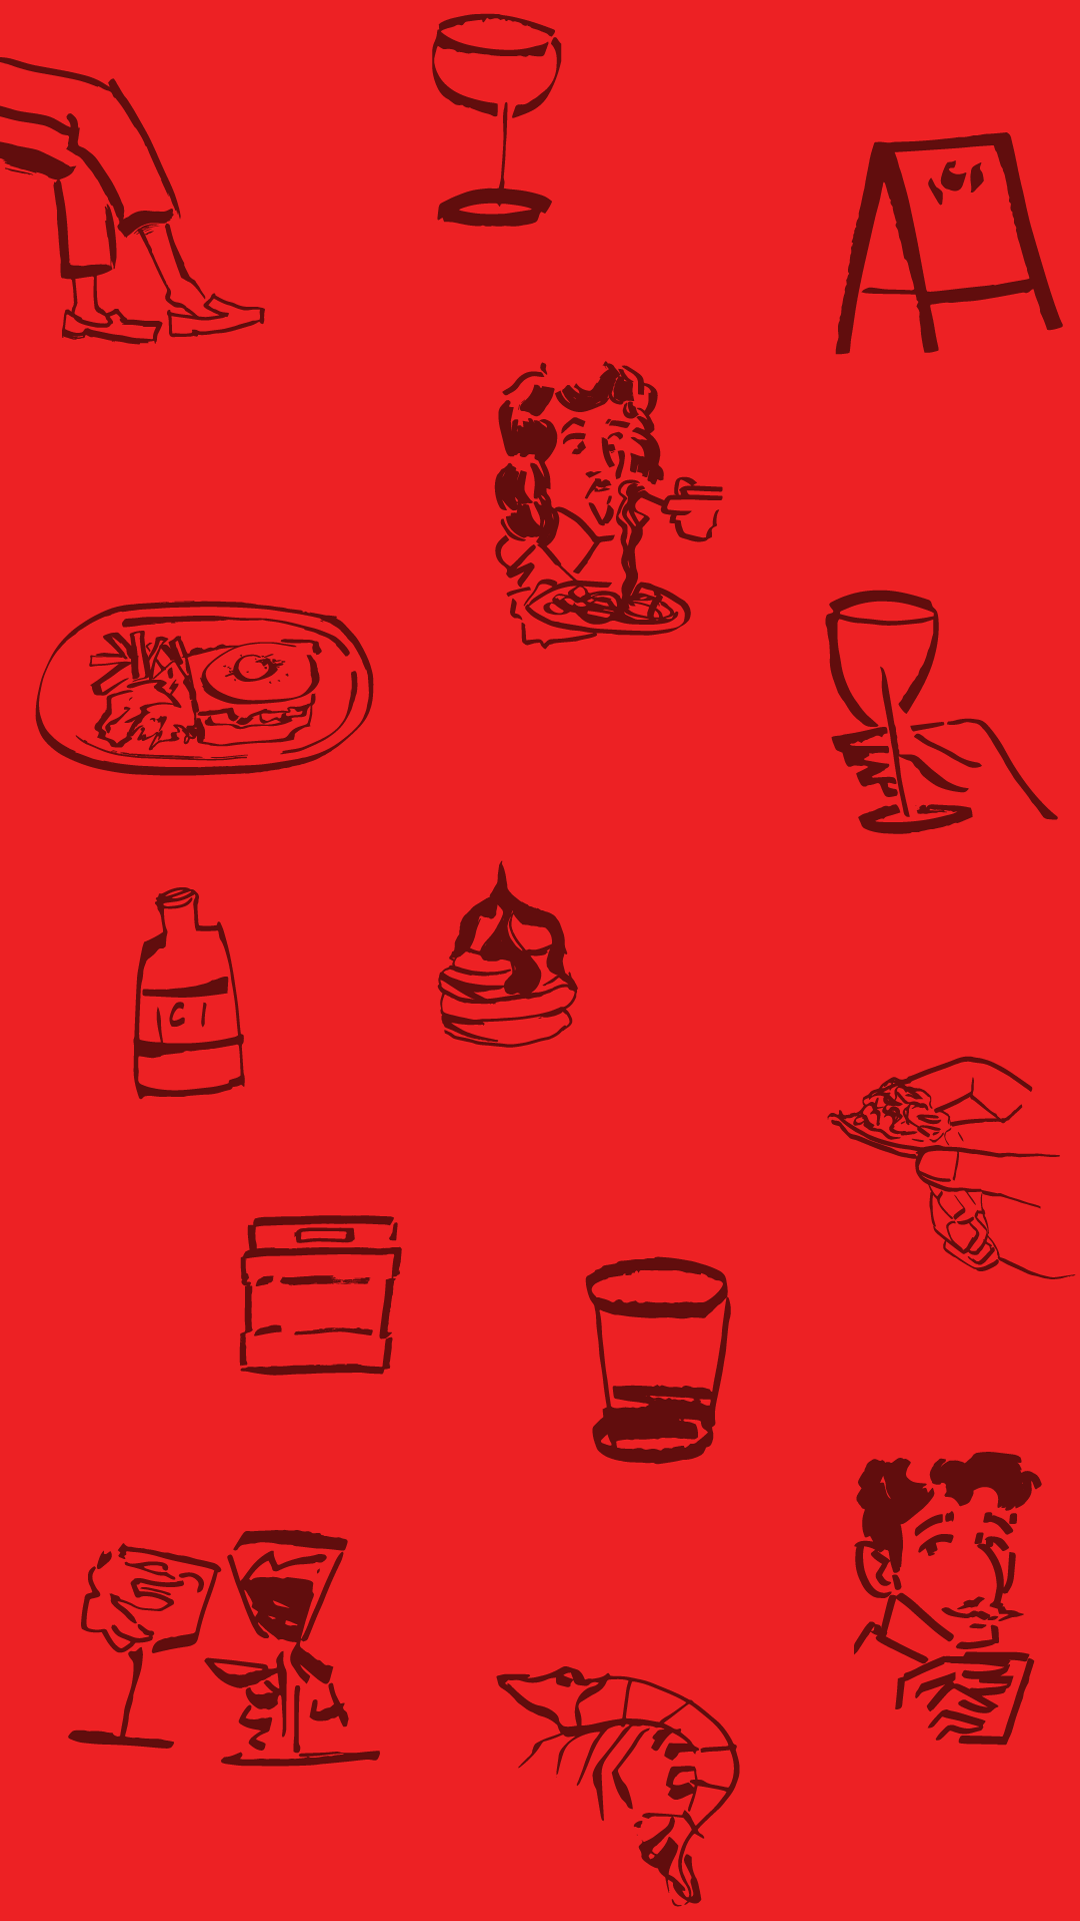 Ikaros Grill - DELIVERY ☎85 3494-6843 📞 85 3771-9226 #ikarosgrill #drinks  #cocktalis #delivery #gastronomia #delicia #cerveja